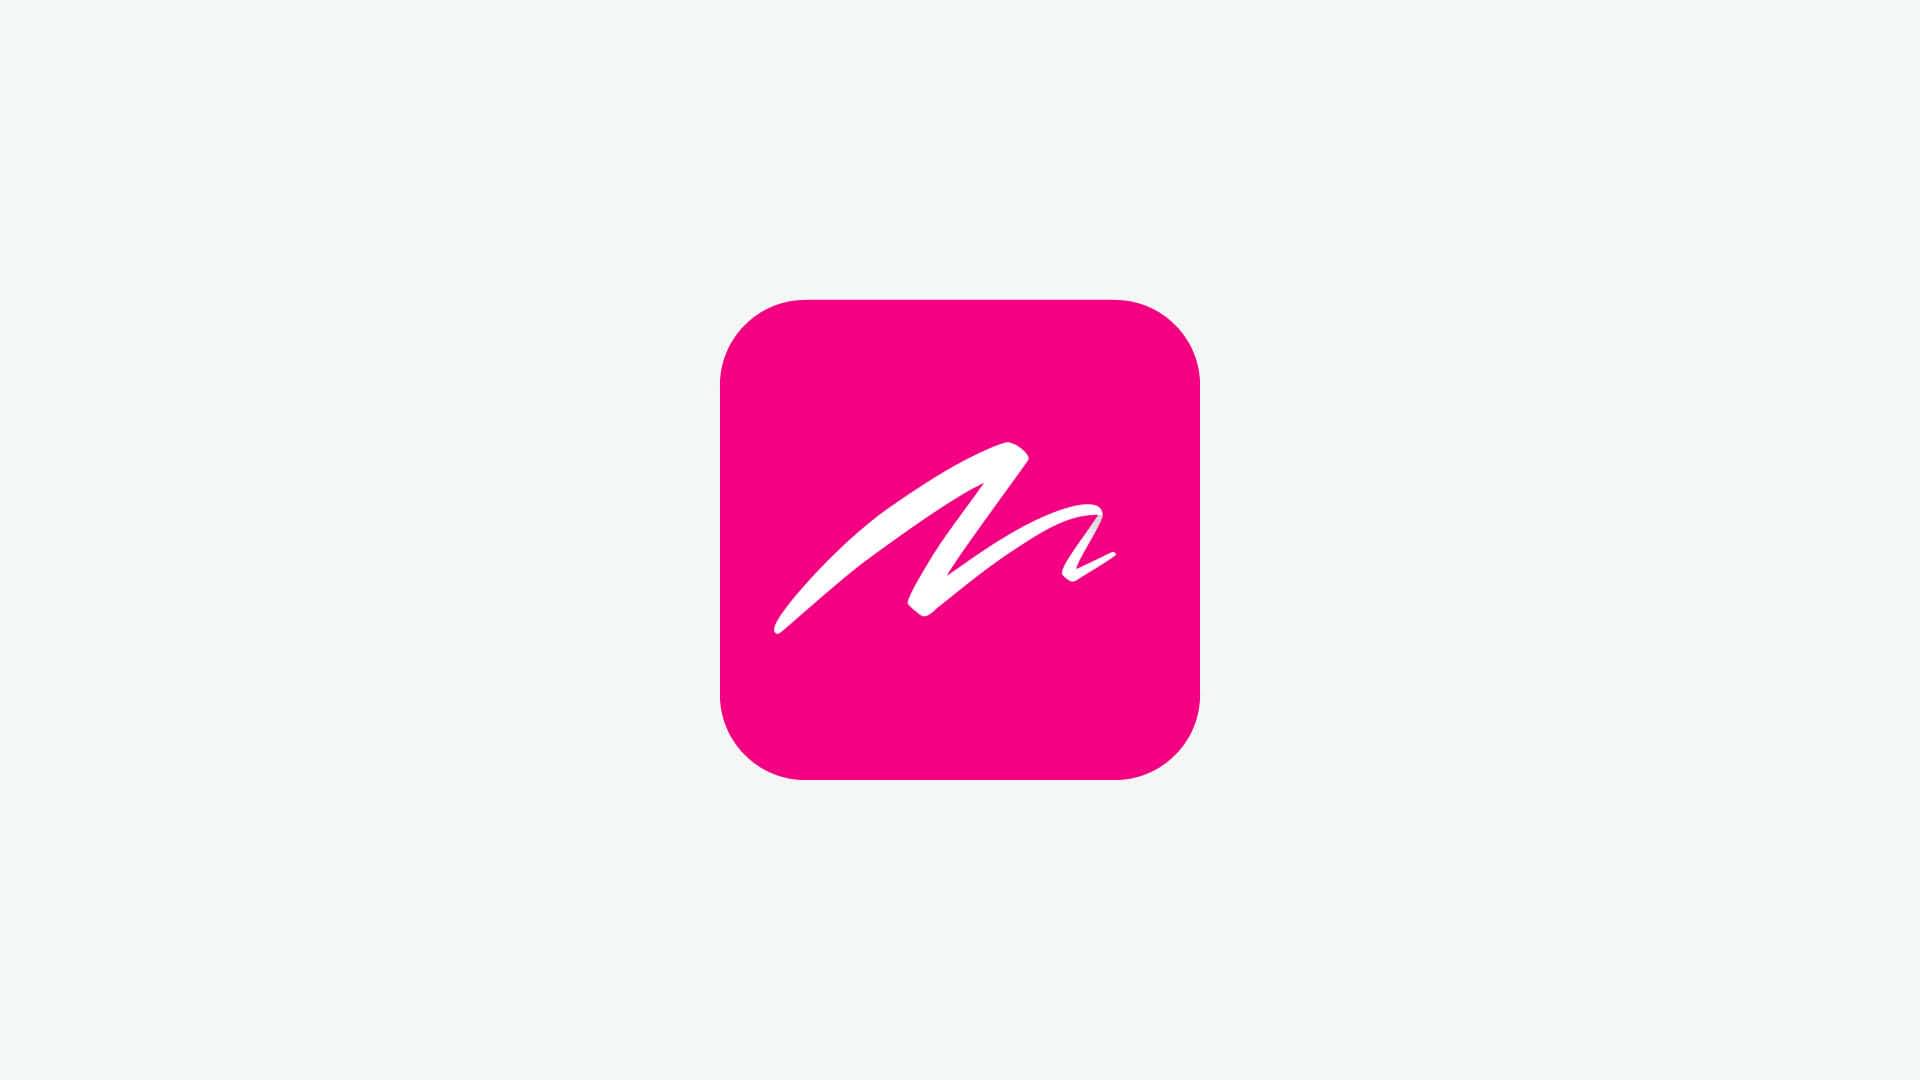 The 'M' icon'